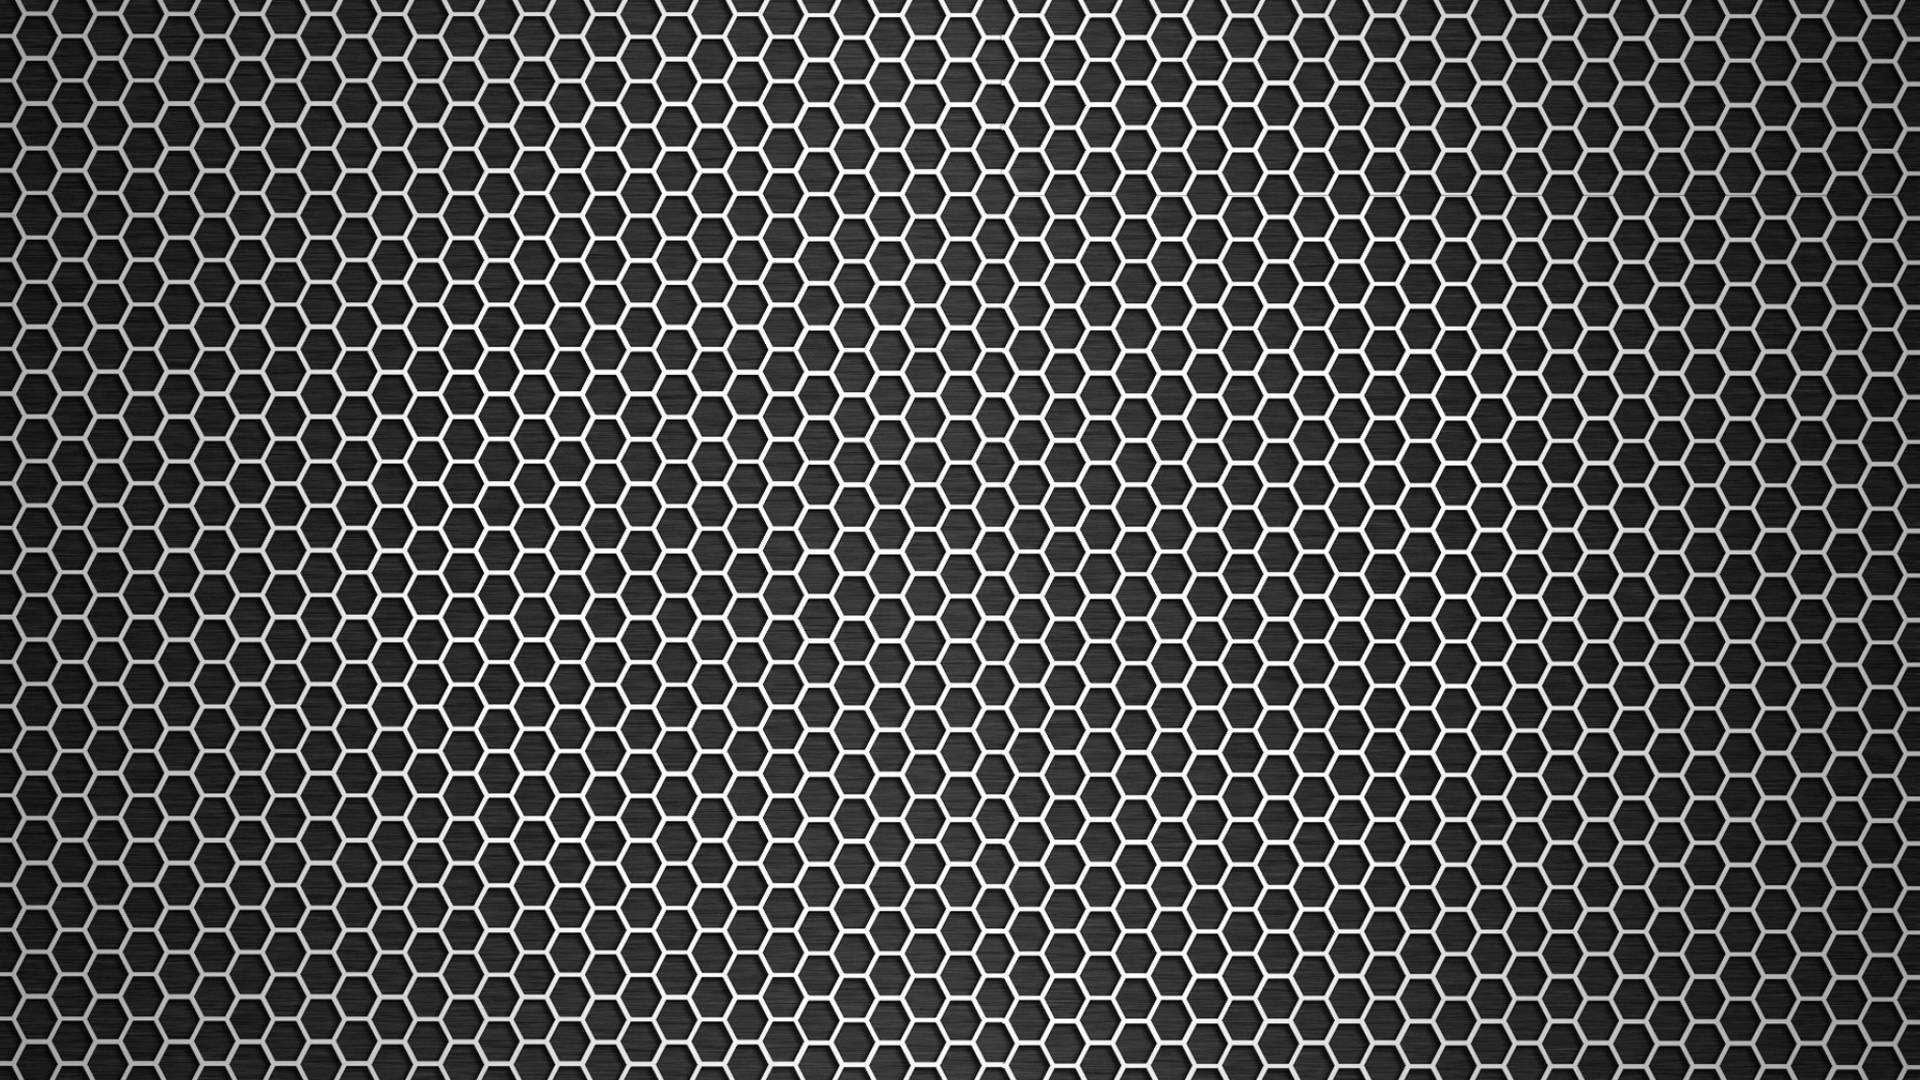 Metal Texture Hexagonal Holes Background